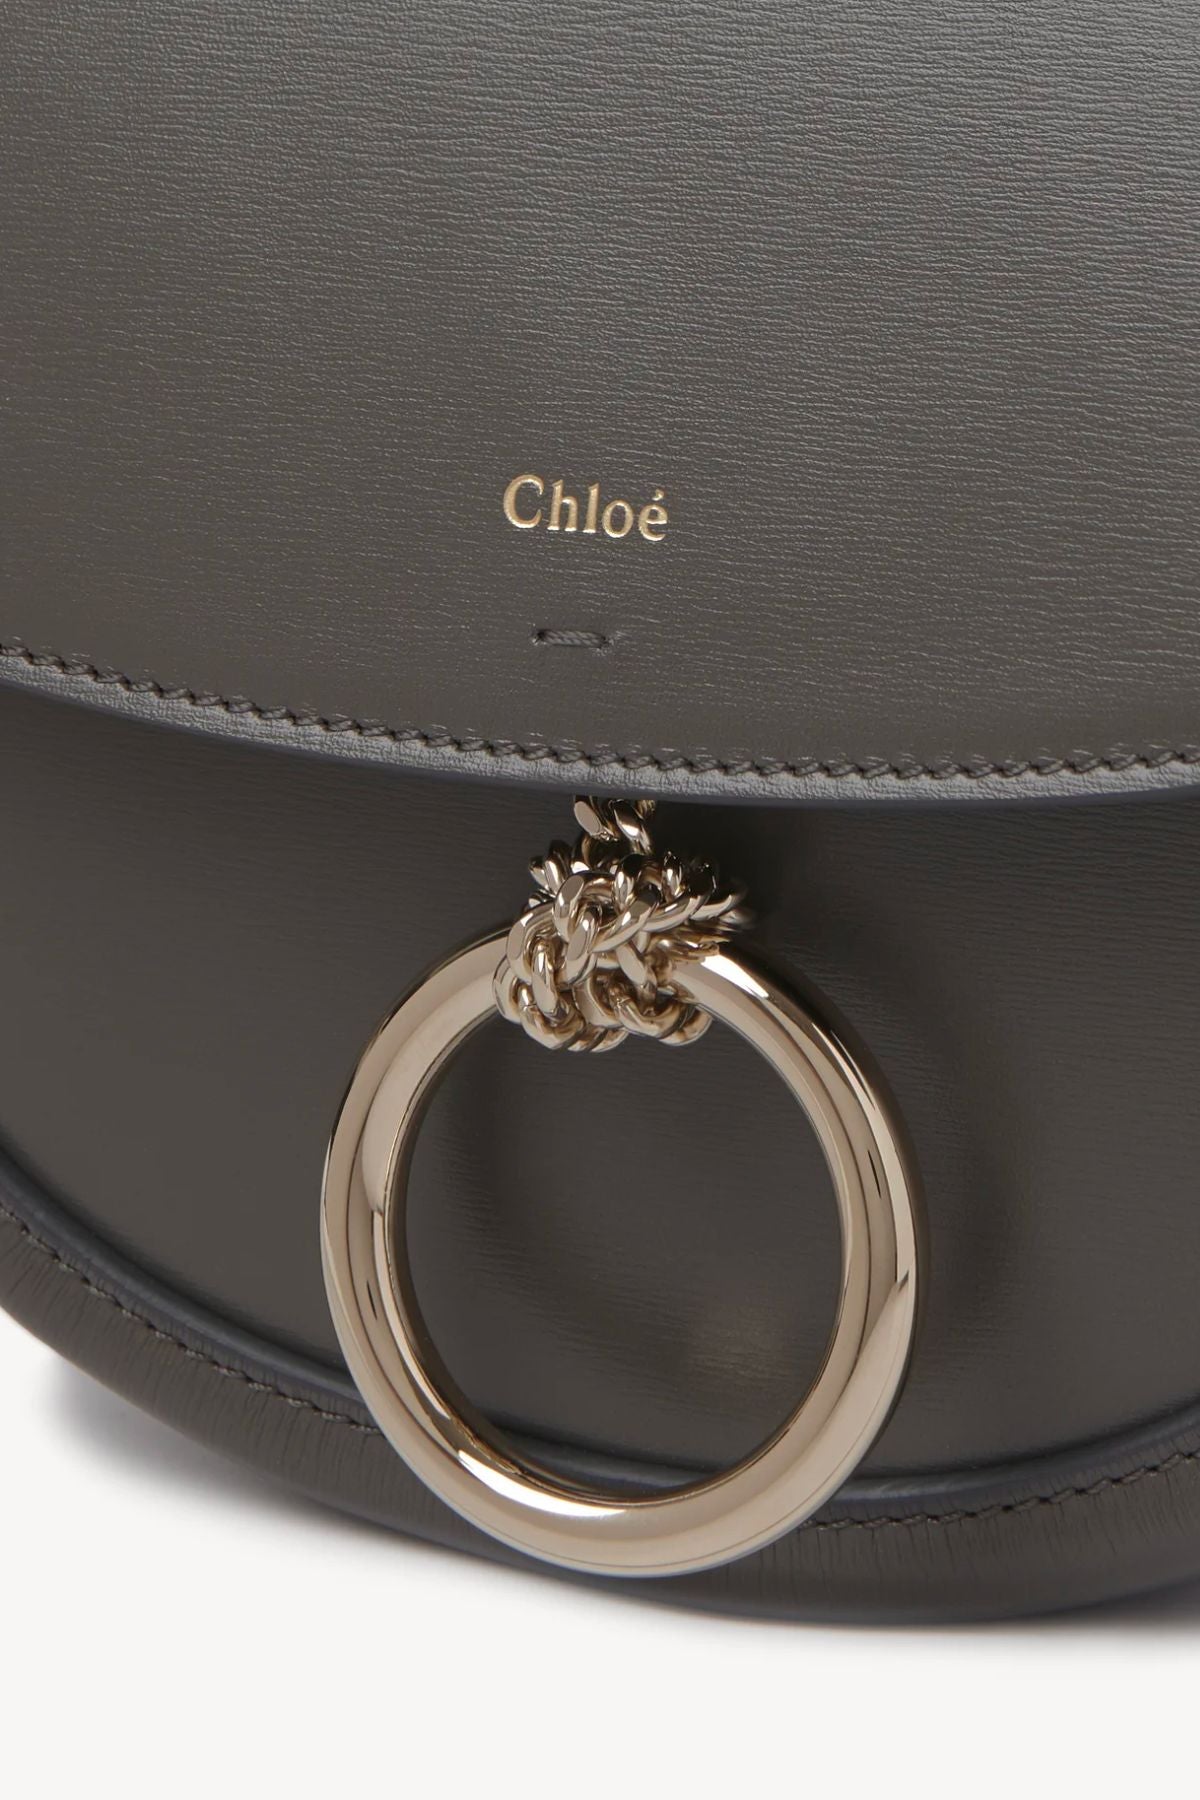 Chloé Arléne Crossbody Bag - Elephant Grey